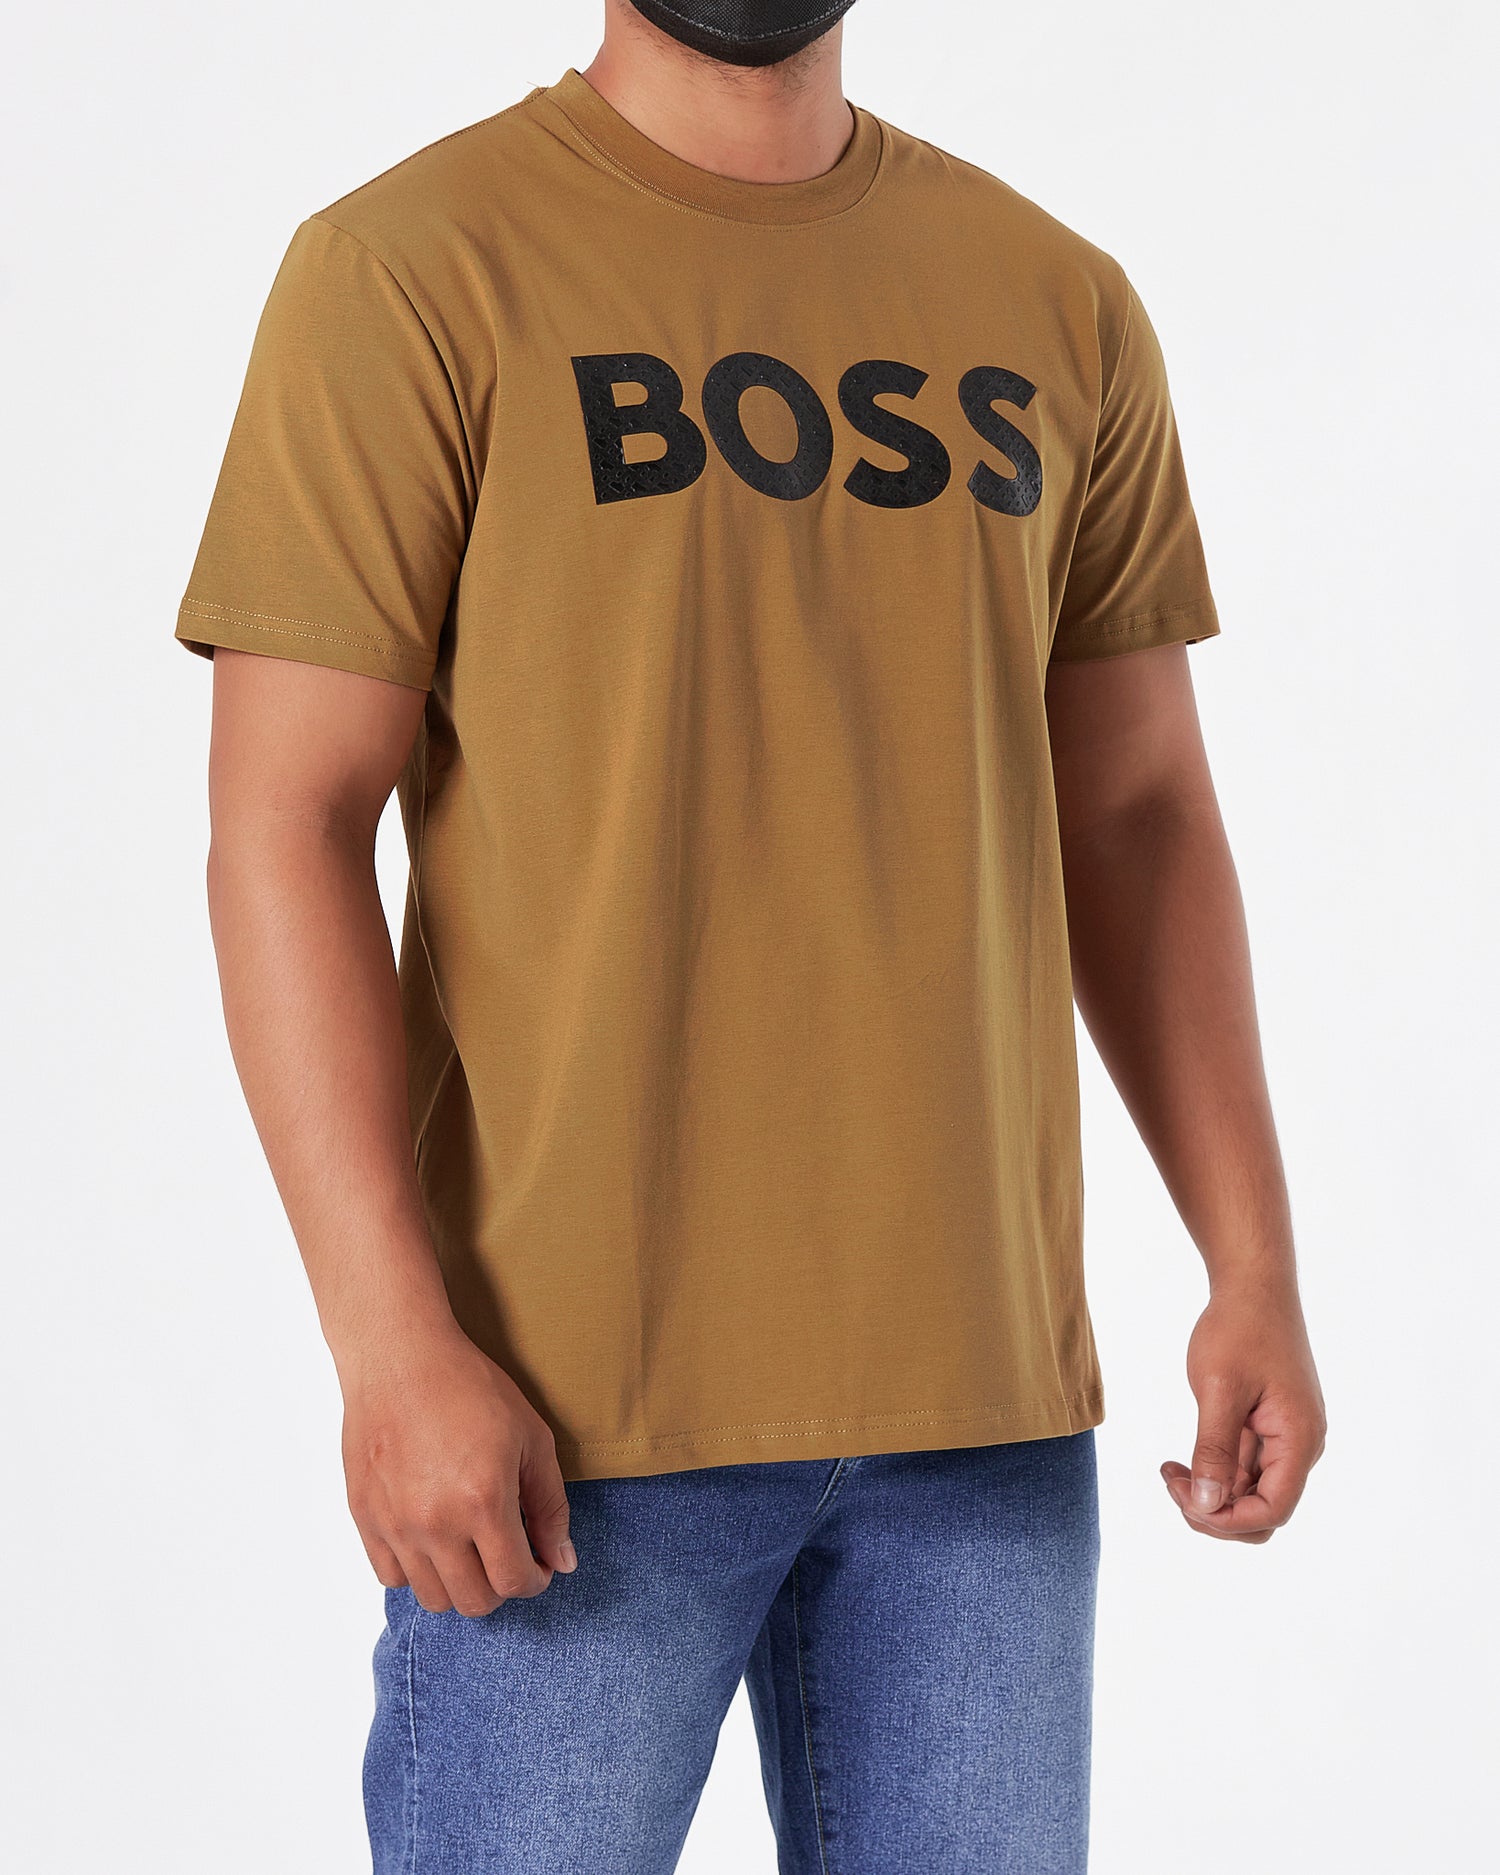 HUG Logo Printed Men Brown T-Shirt 16.90